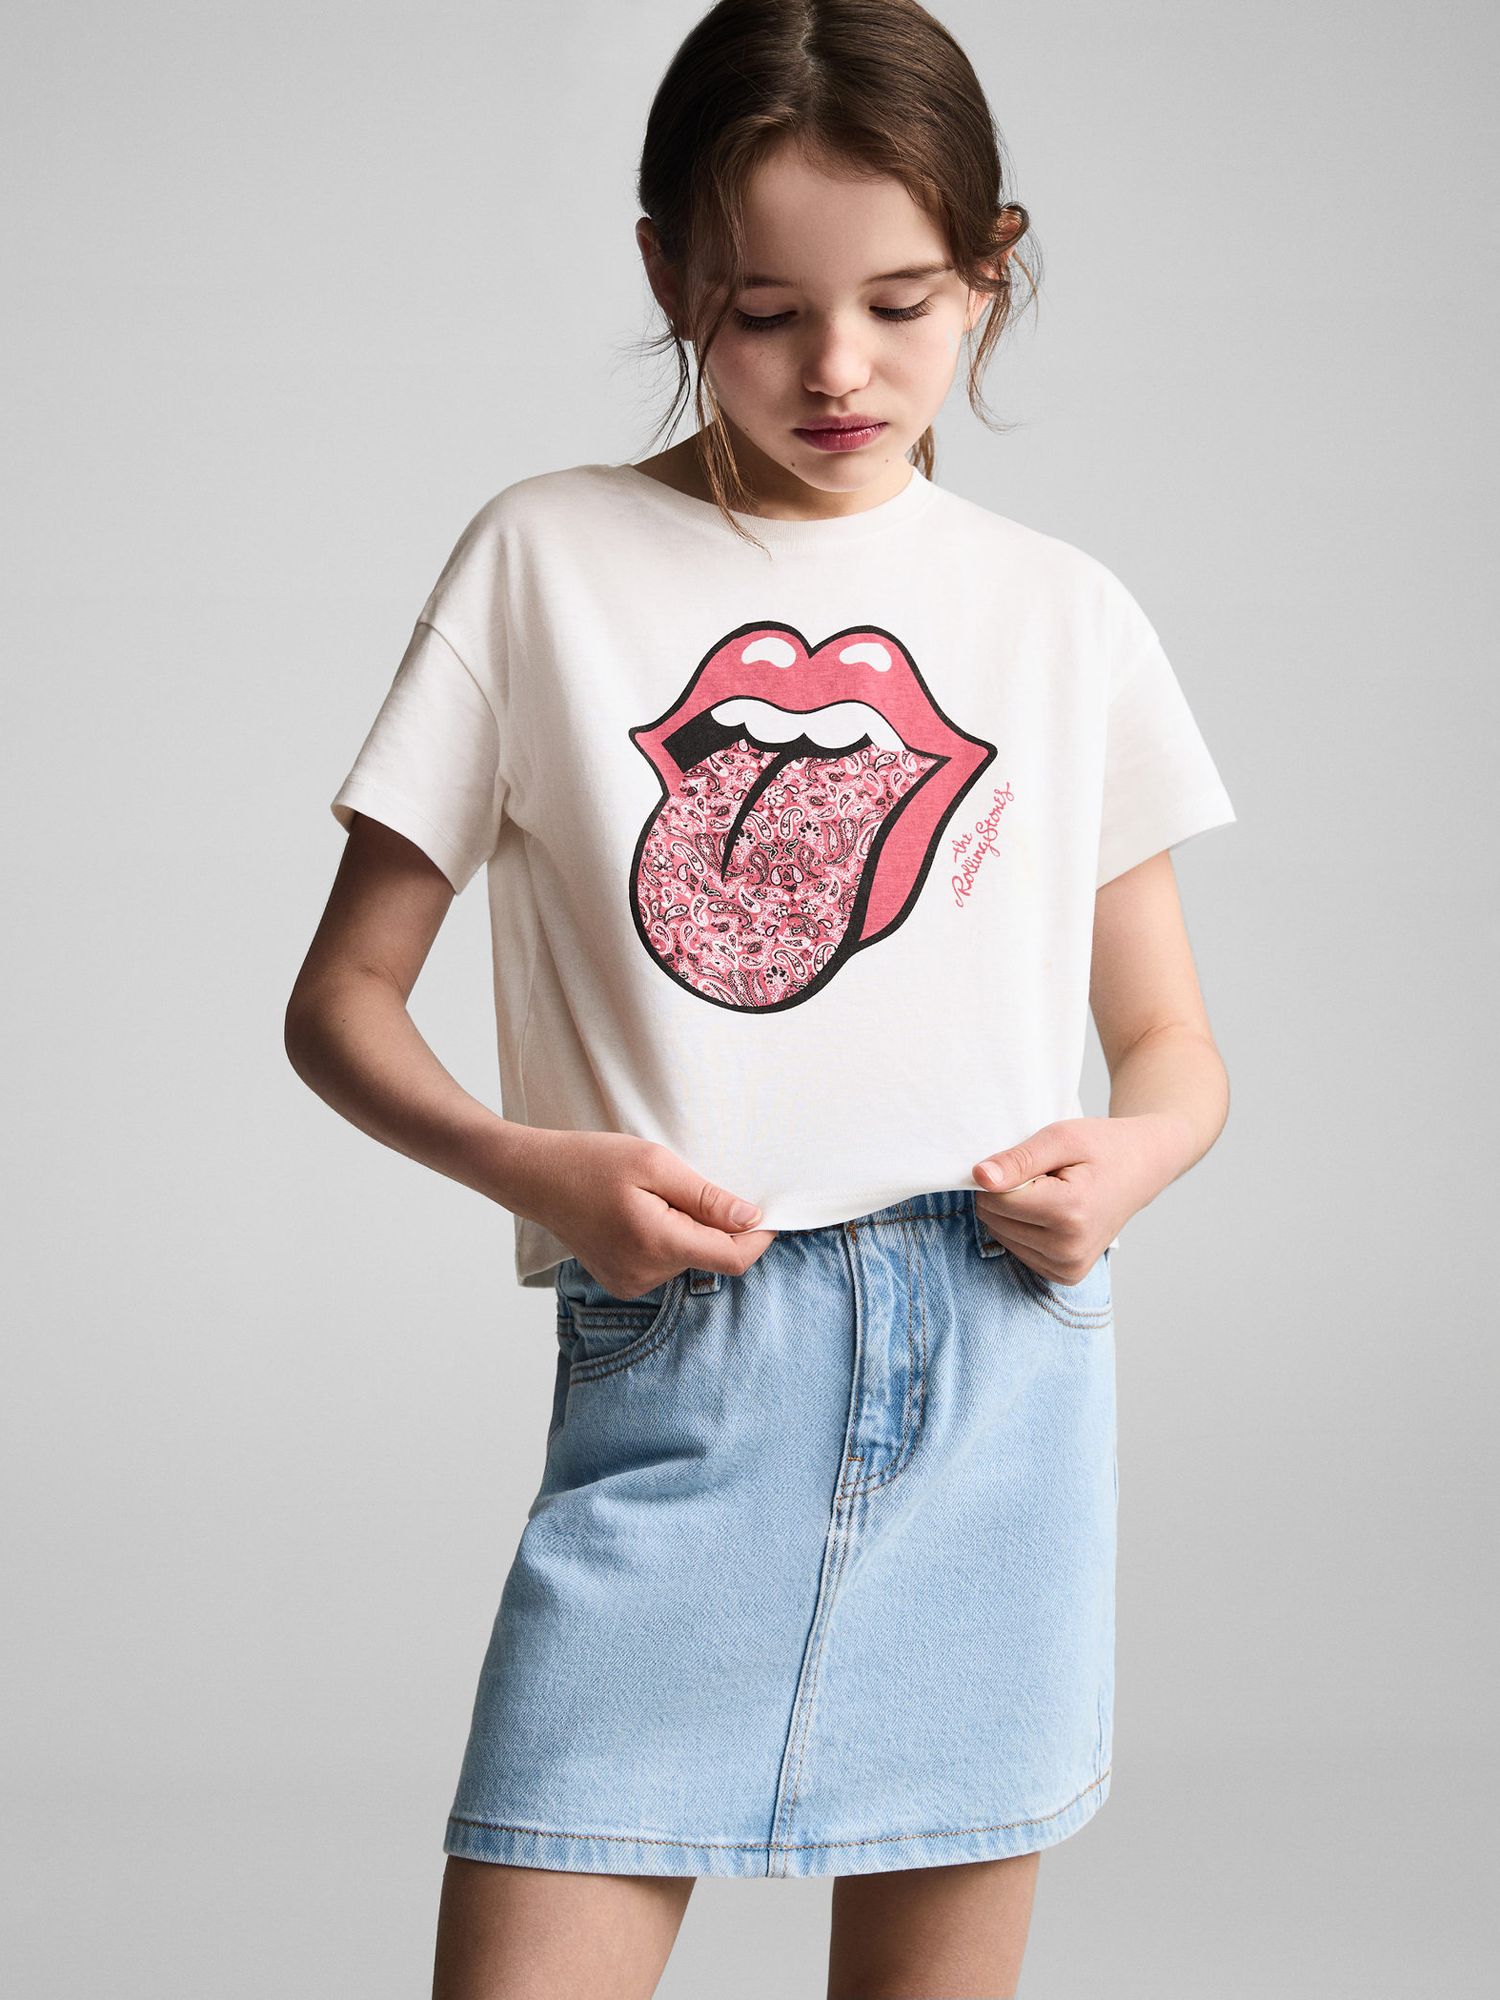 Mango Kids' The Rolling Stones T-Shirt, White/Multi, 11-12 years